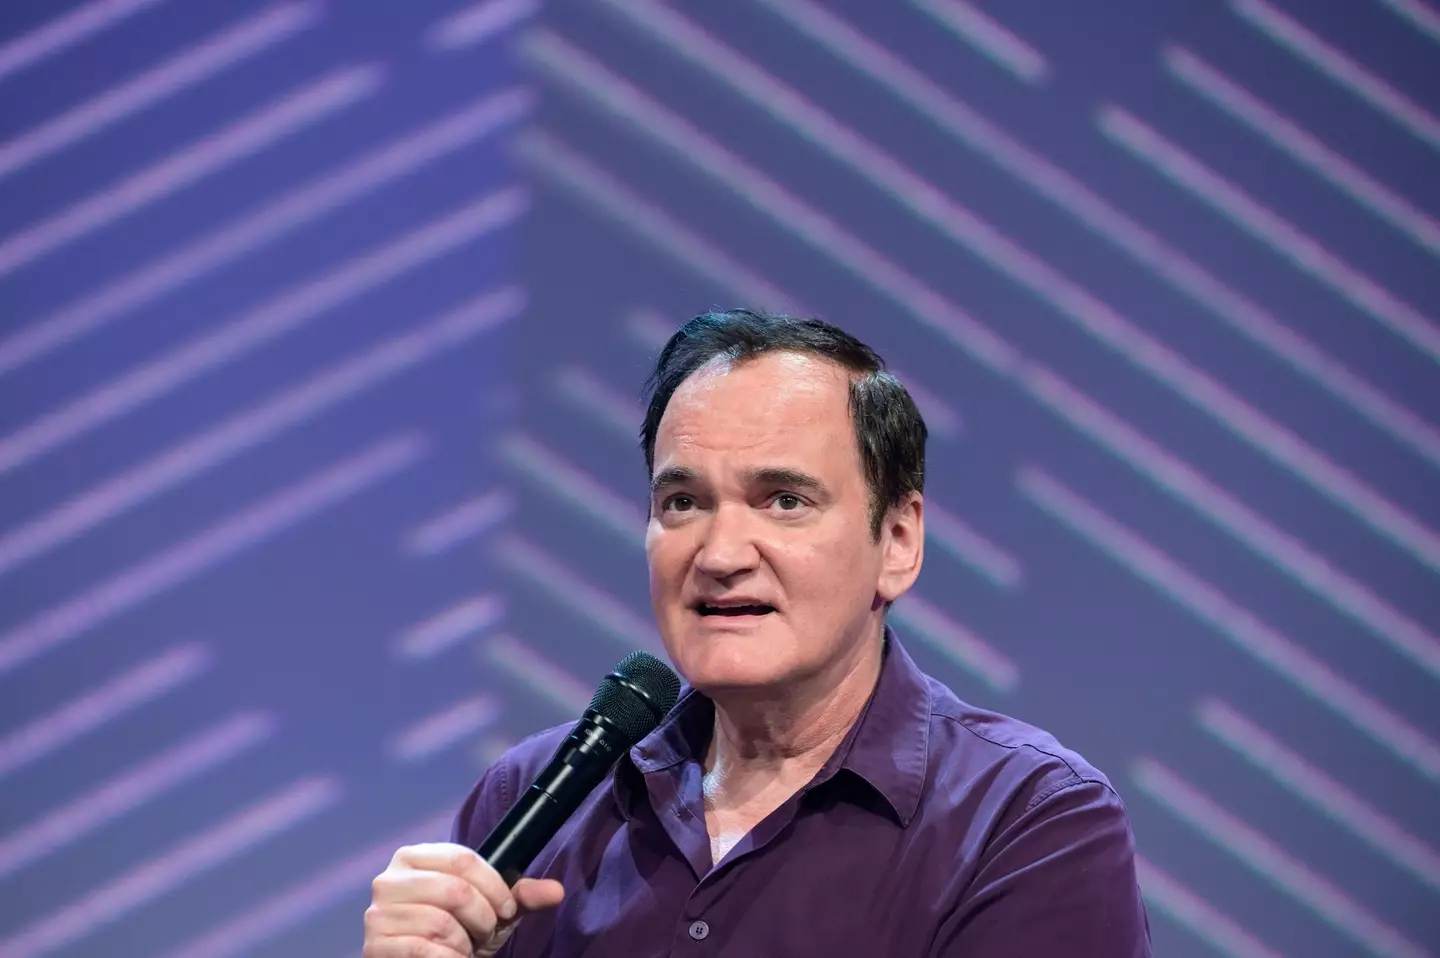 Quentin Tarantino has denied the claims.